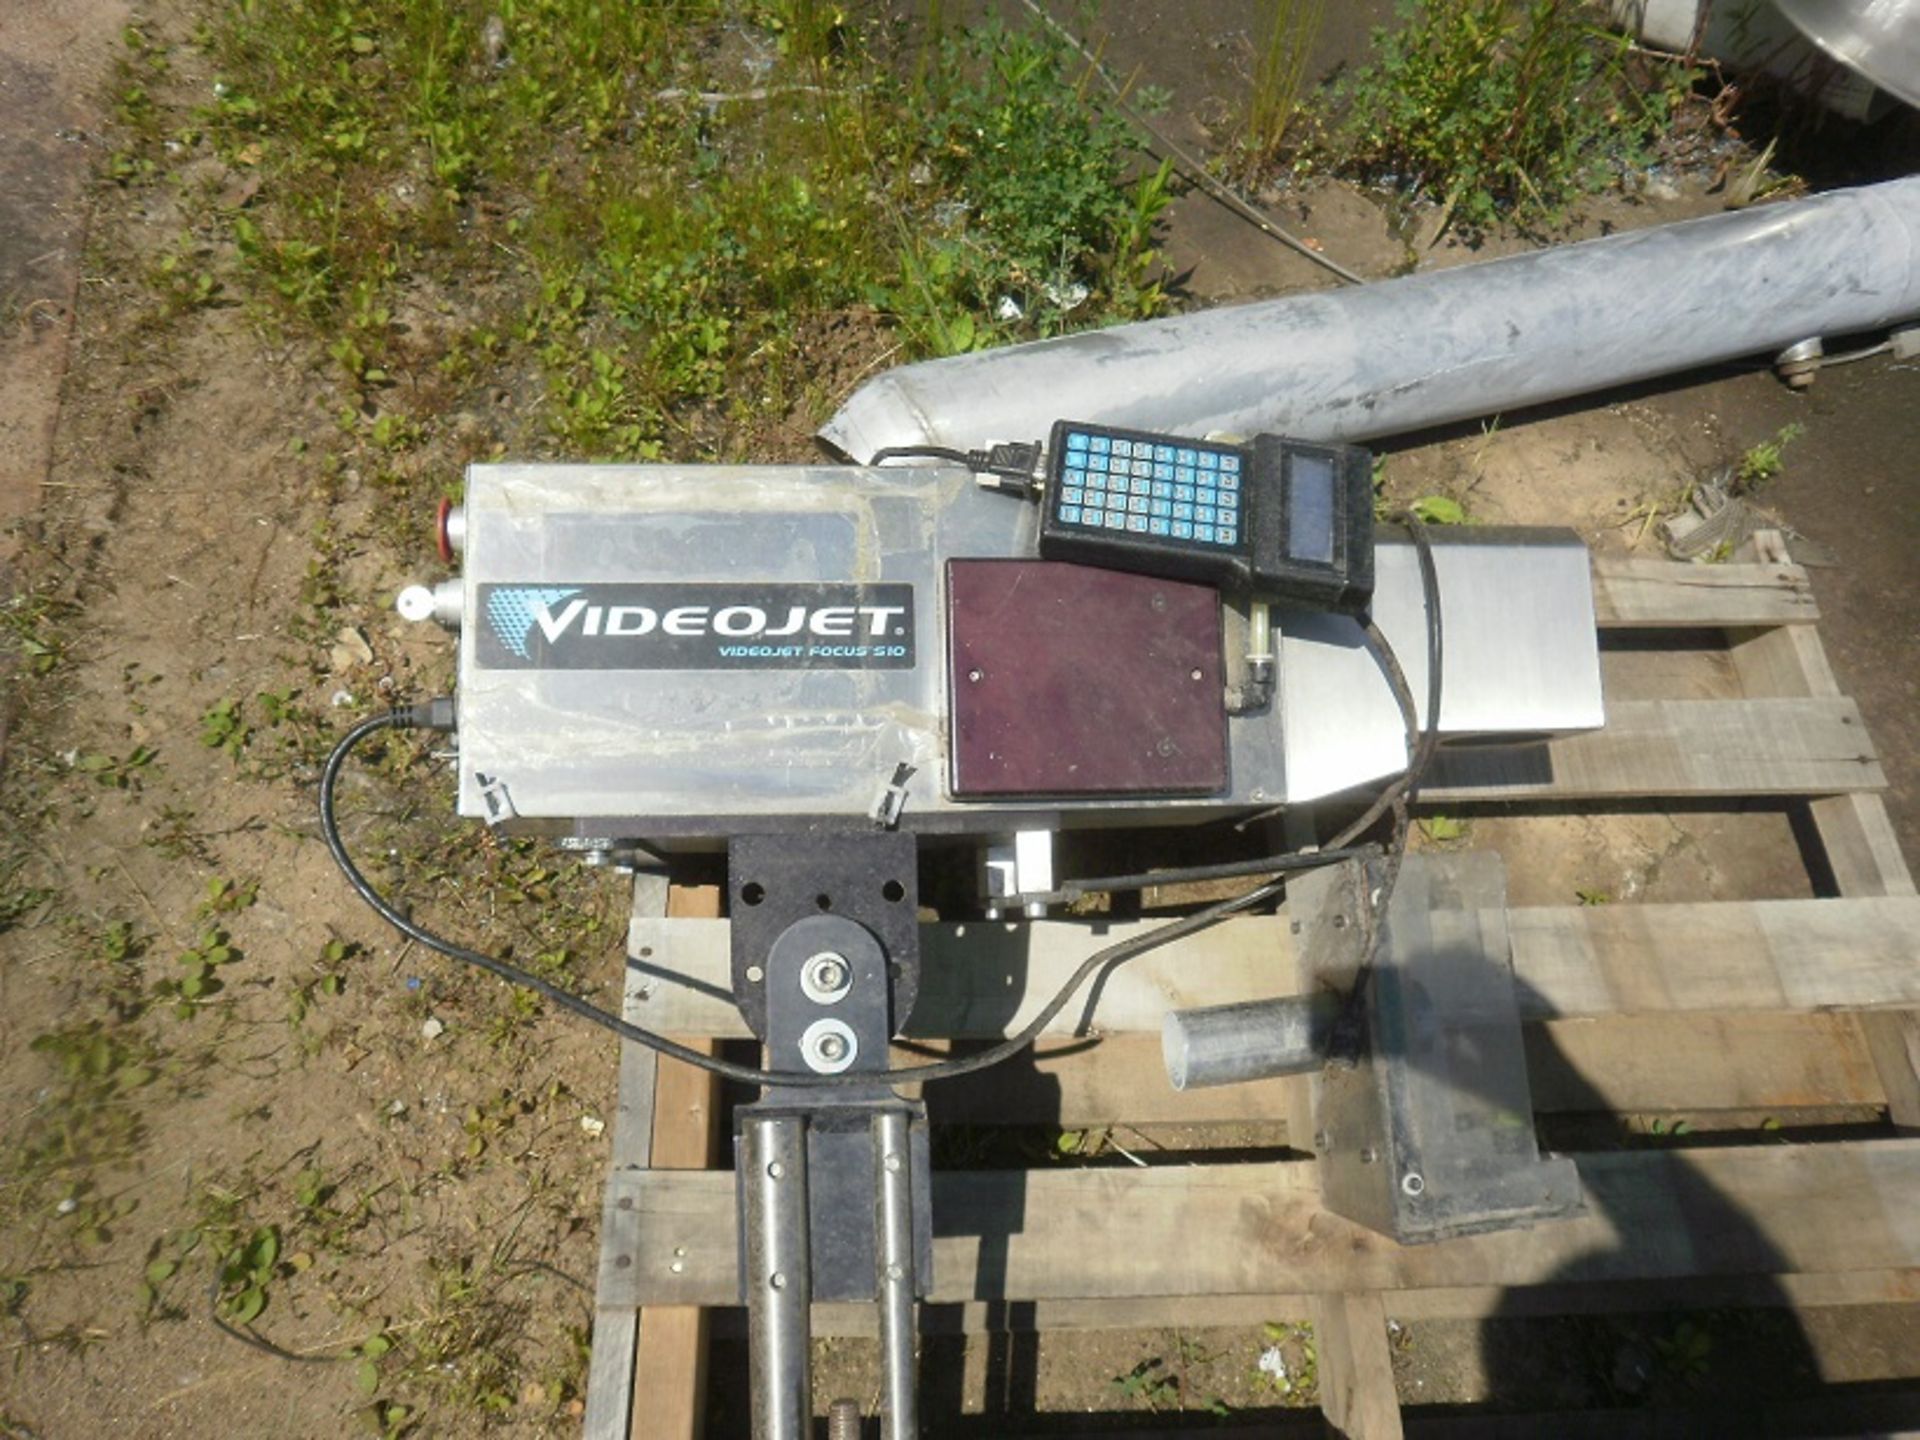 Videojet Laser Marking system, Model S10 Encore. c/w Stand, QWERTY controls, Videojet Laser